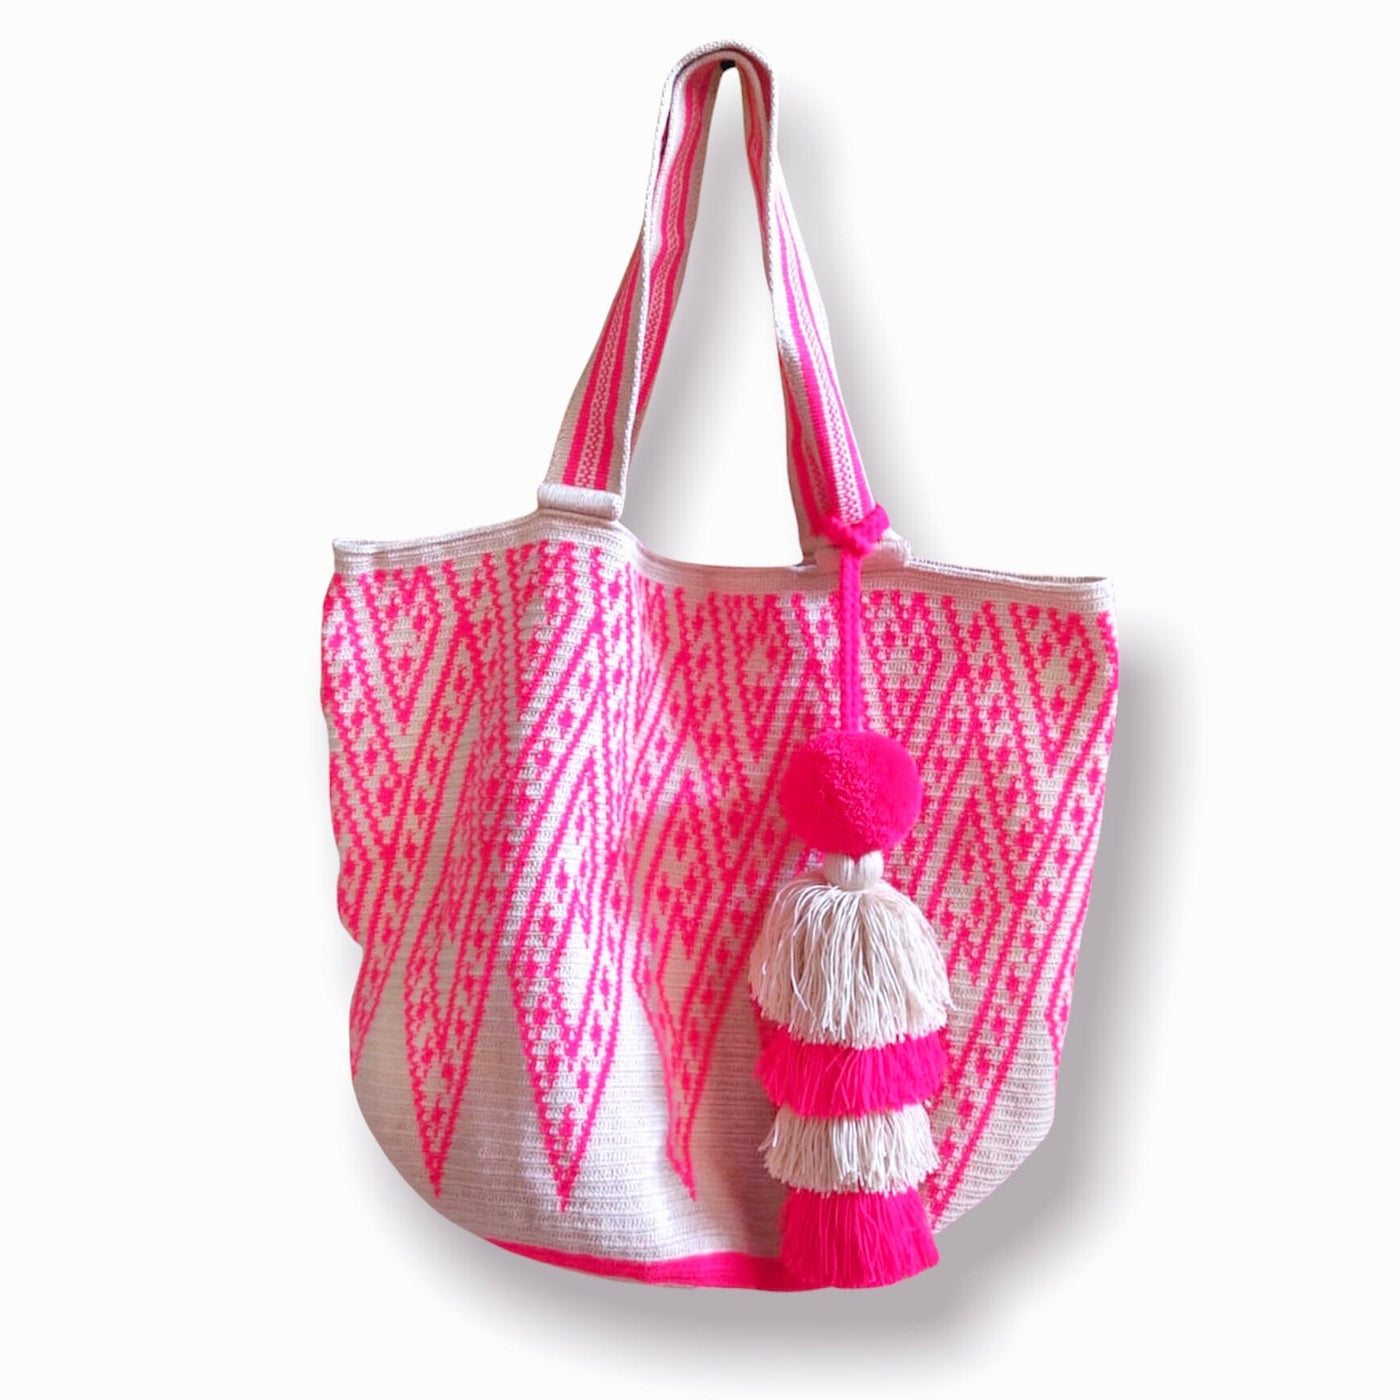 Hot Pink Maxi Tote Beach Bag | Crochet Summer Tote | Colorful 4U